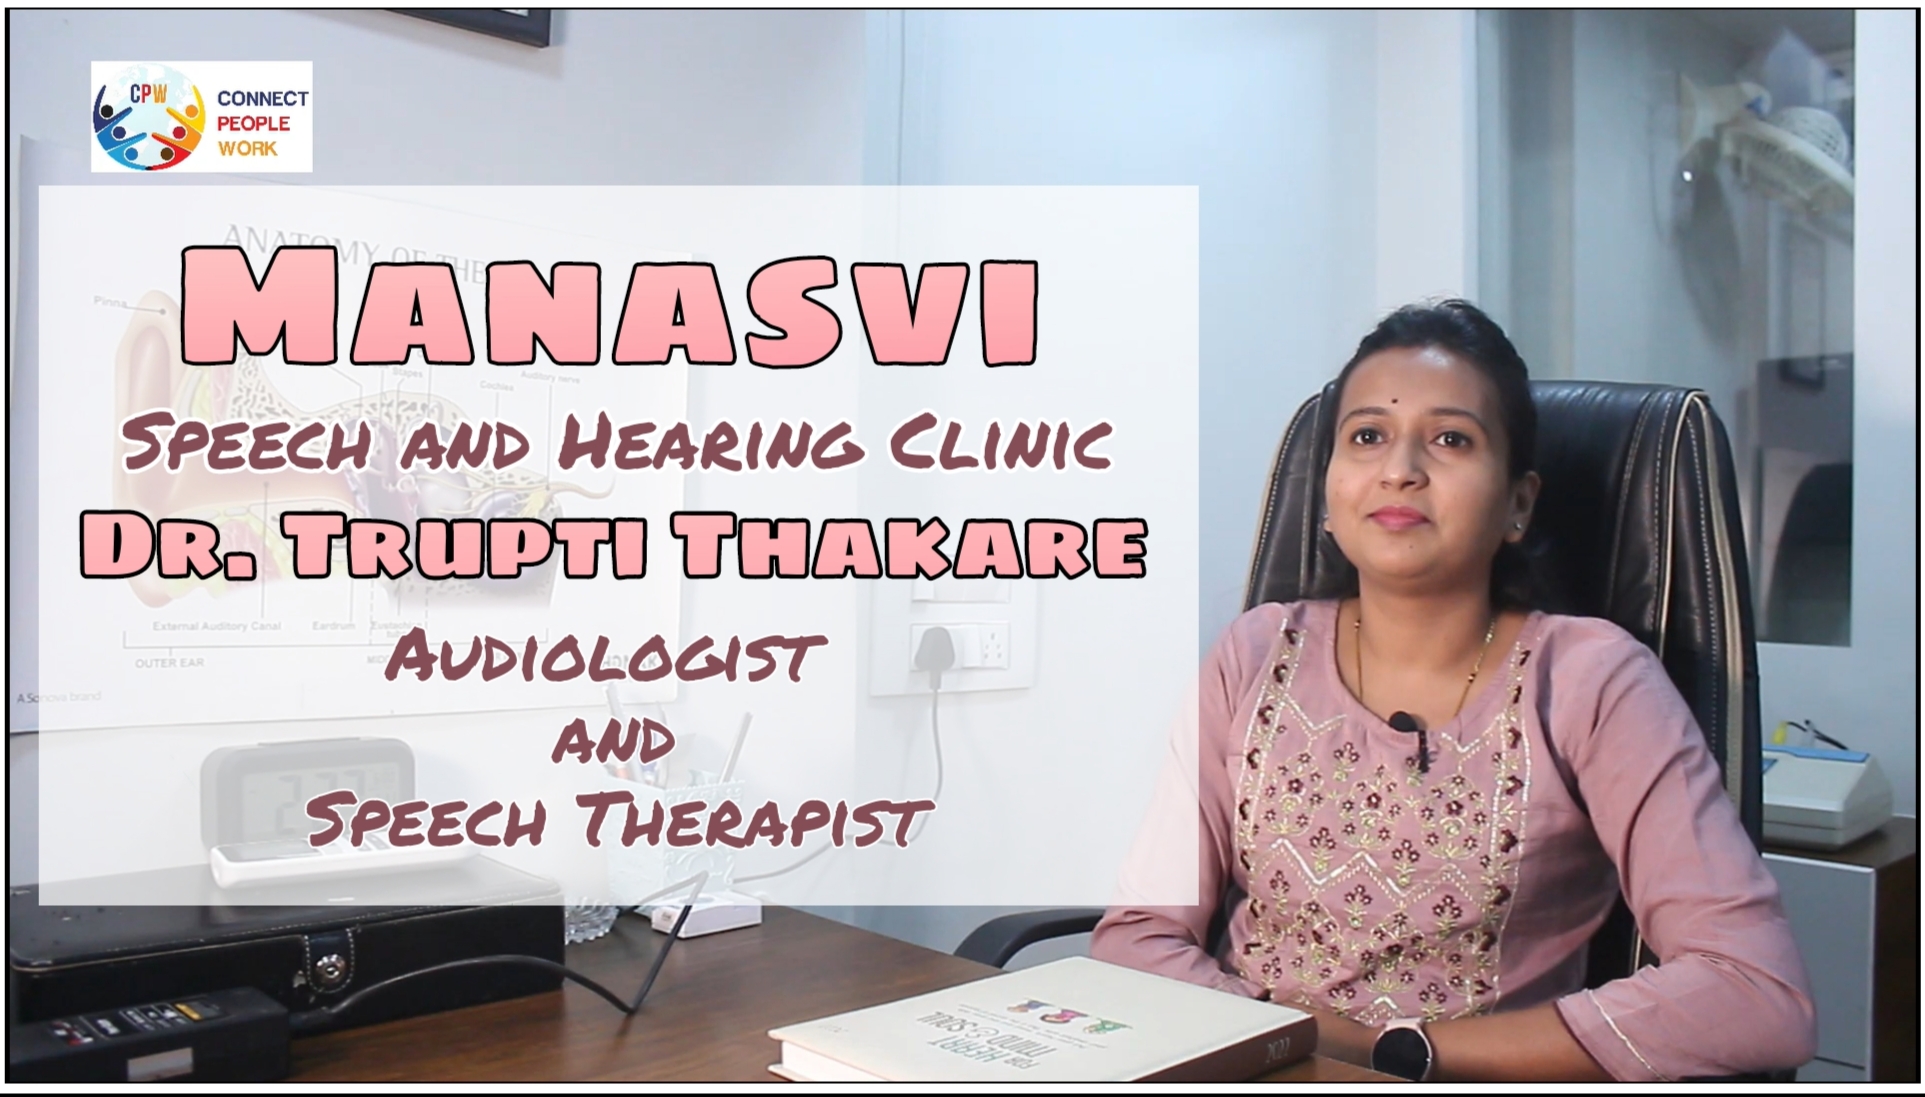 Manasvi Clinic